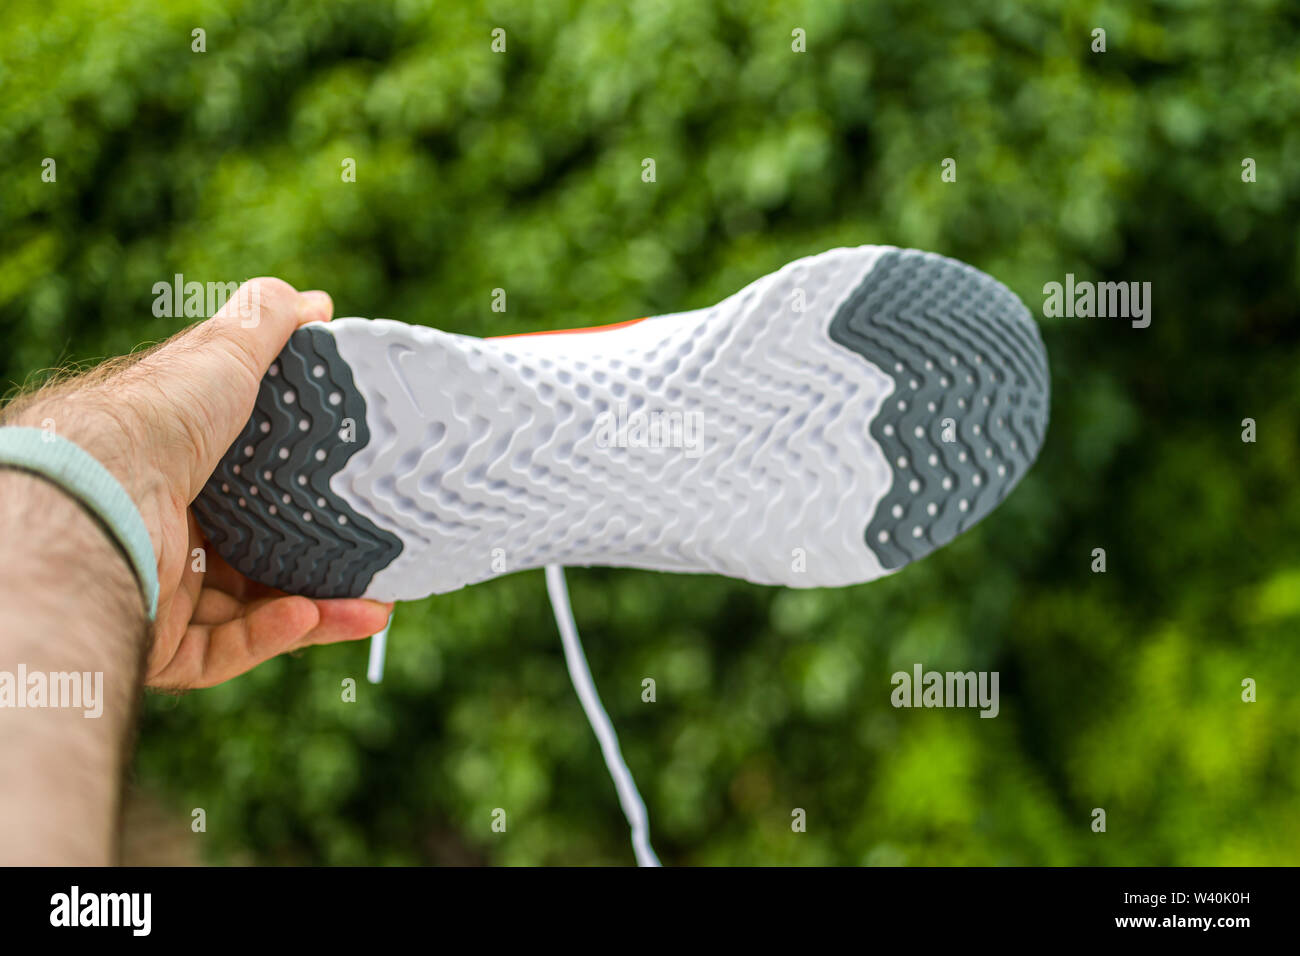 Nike epic reaccionar flyknit 2 fotografías e imágenes de alta resolución -  Alamy